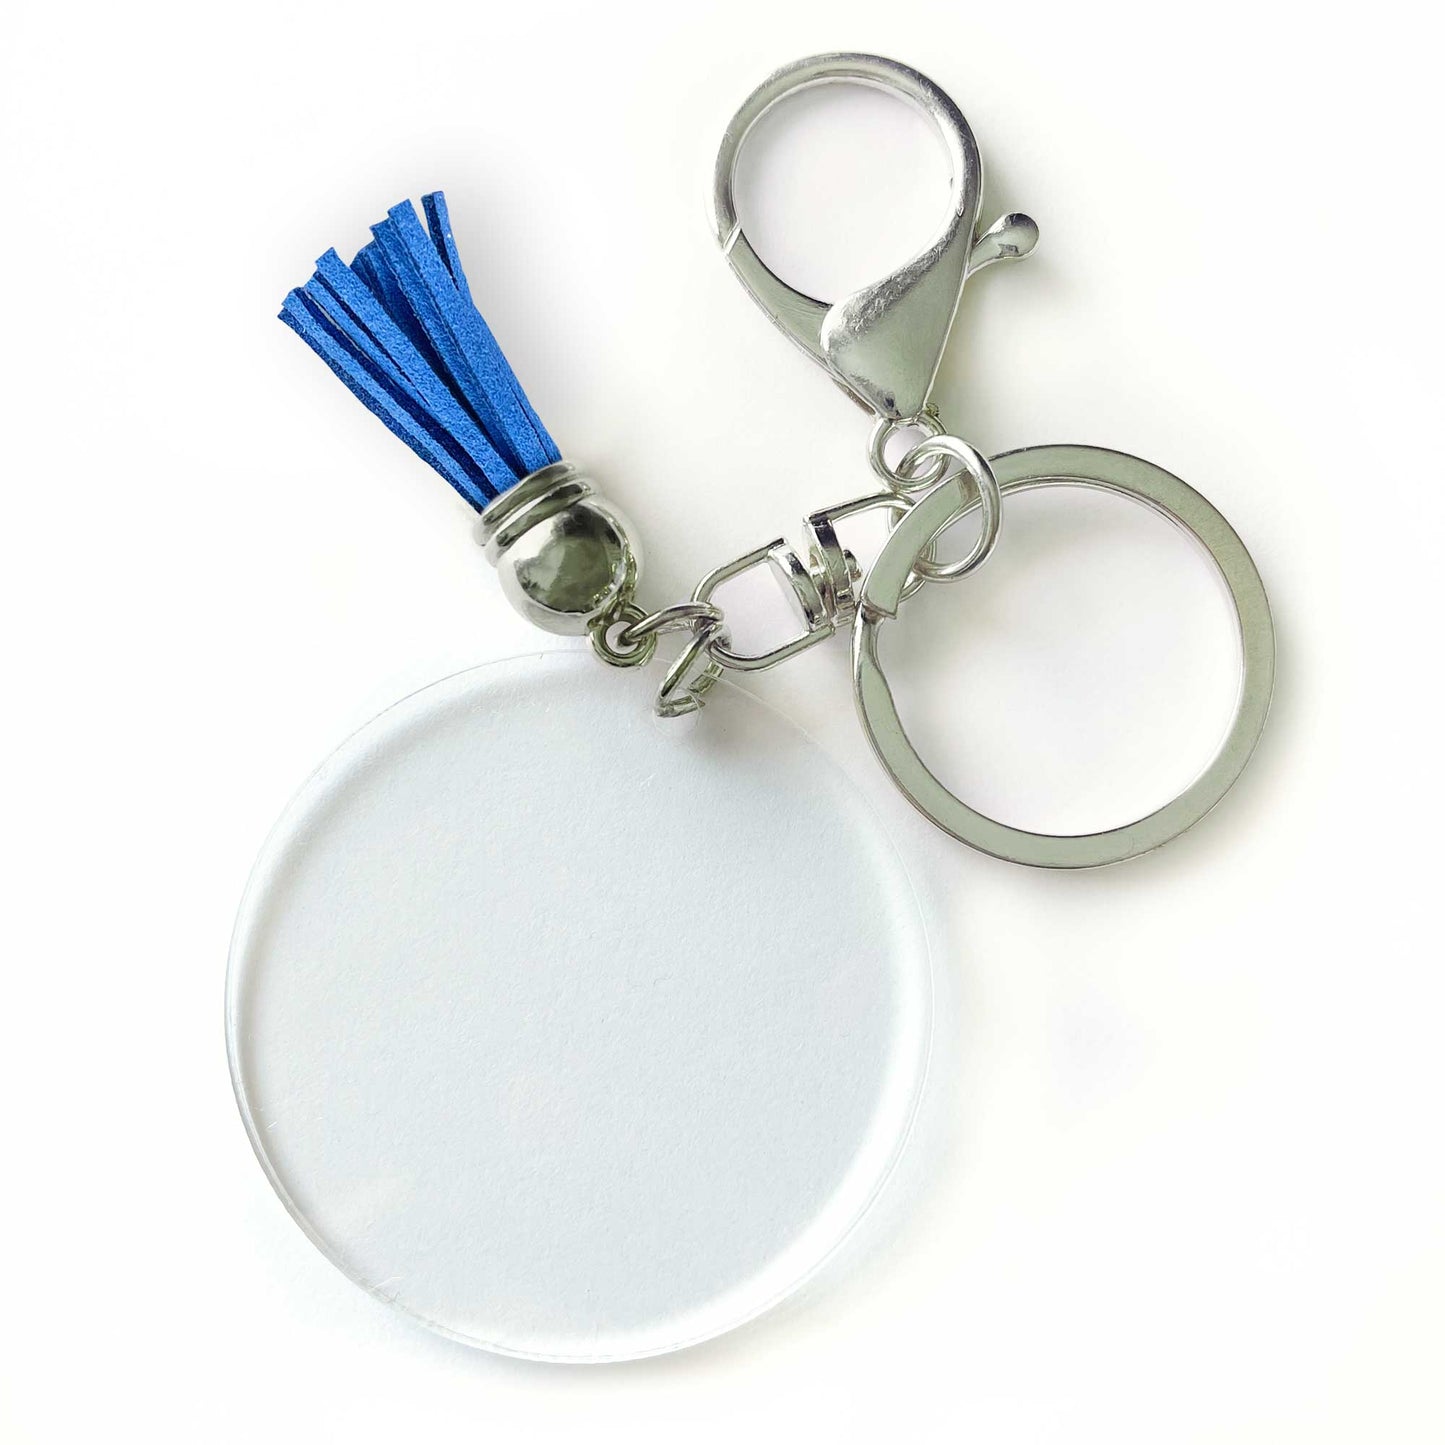 Keychain Tassels in Royal Blue